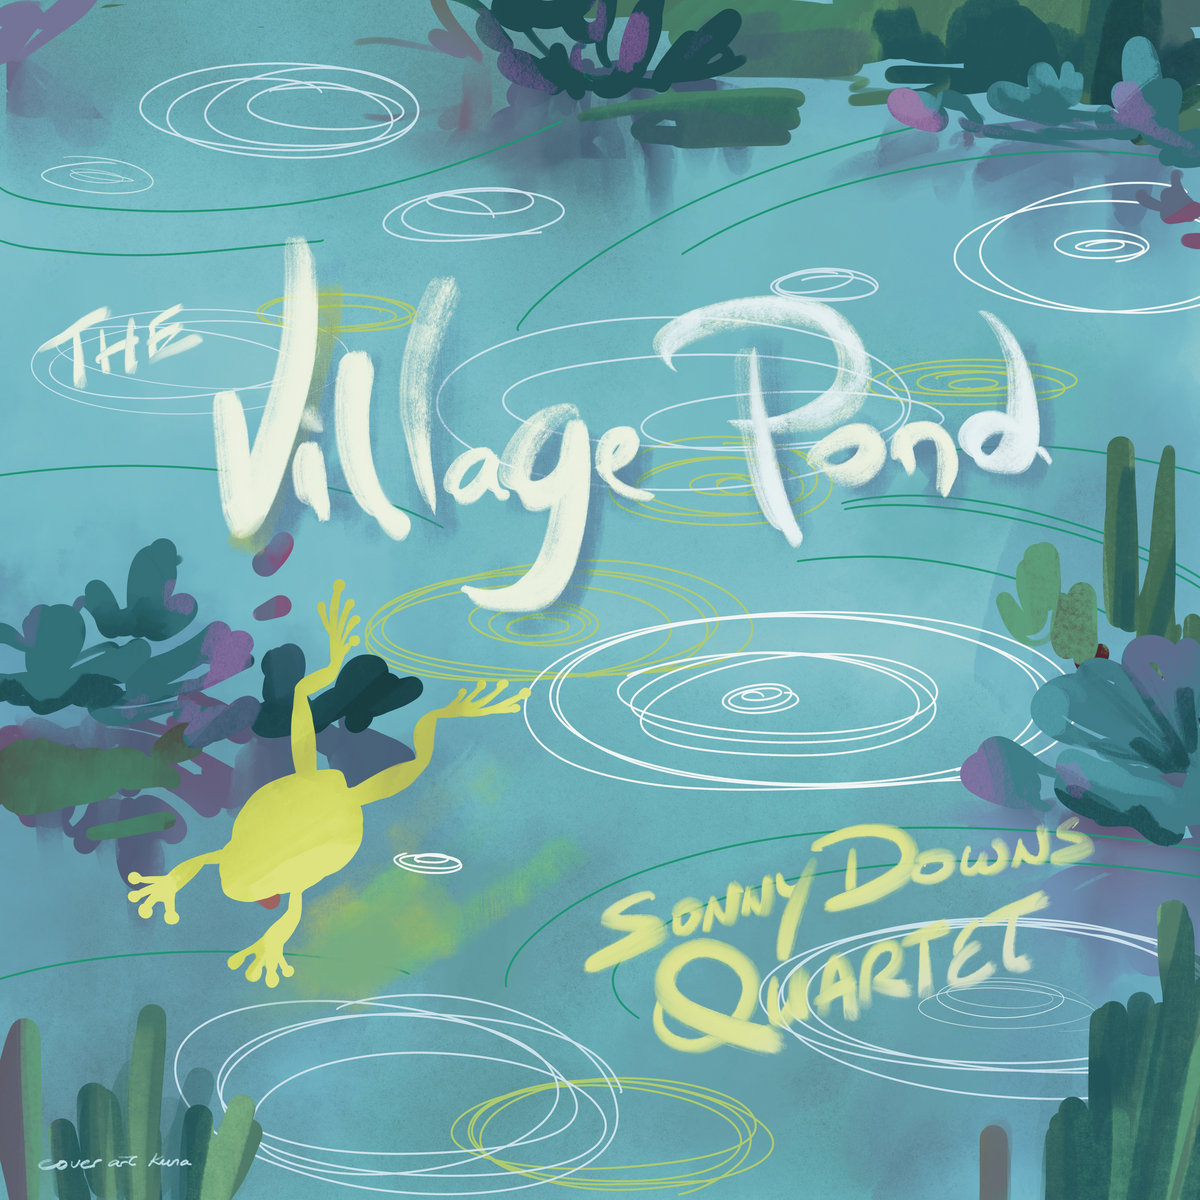 The Village Pond, by The Sonny Downs Quartet